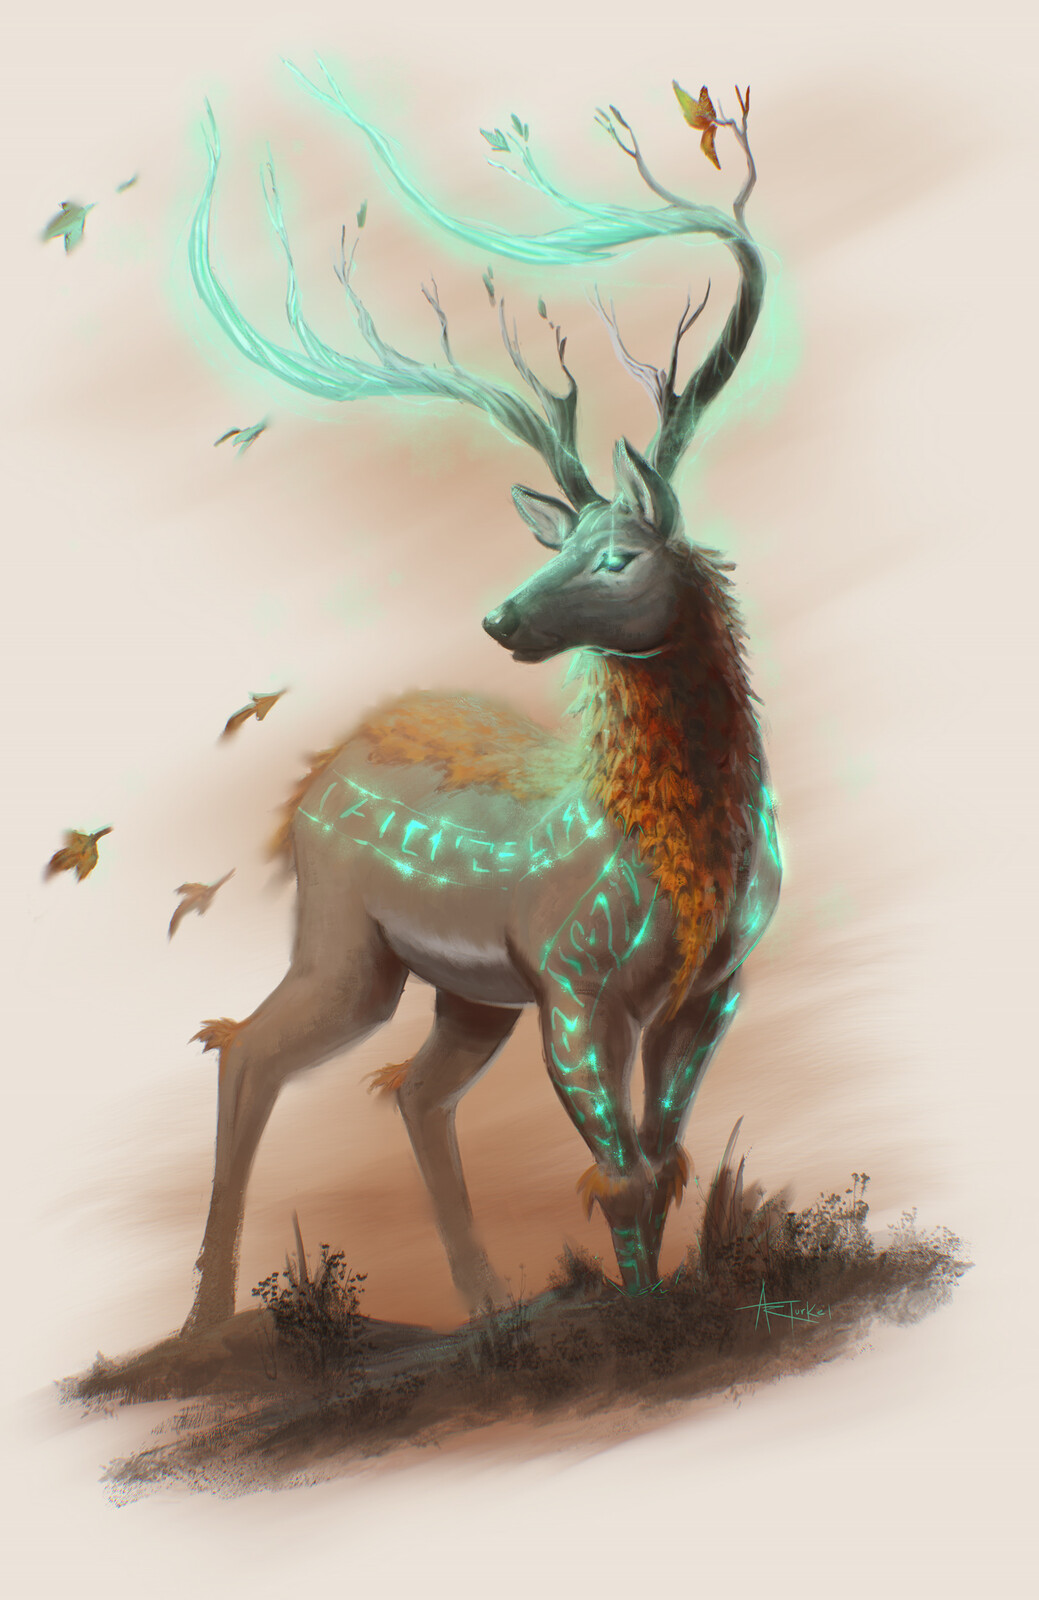 The light version of a druid spirit animal.